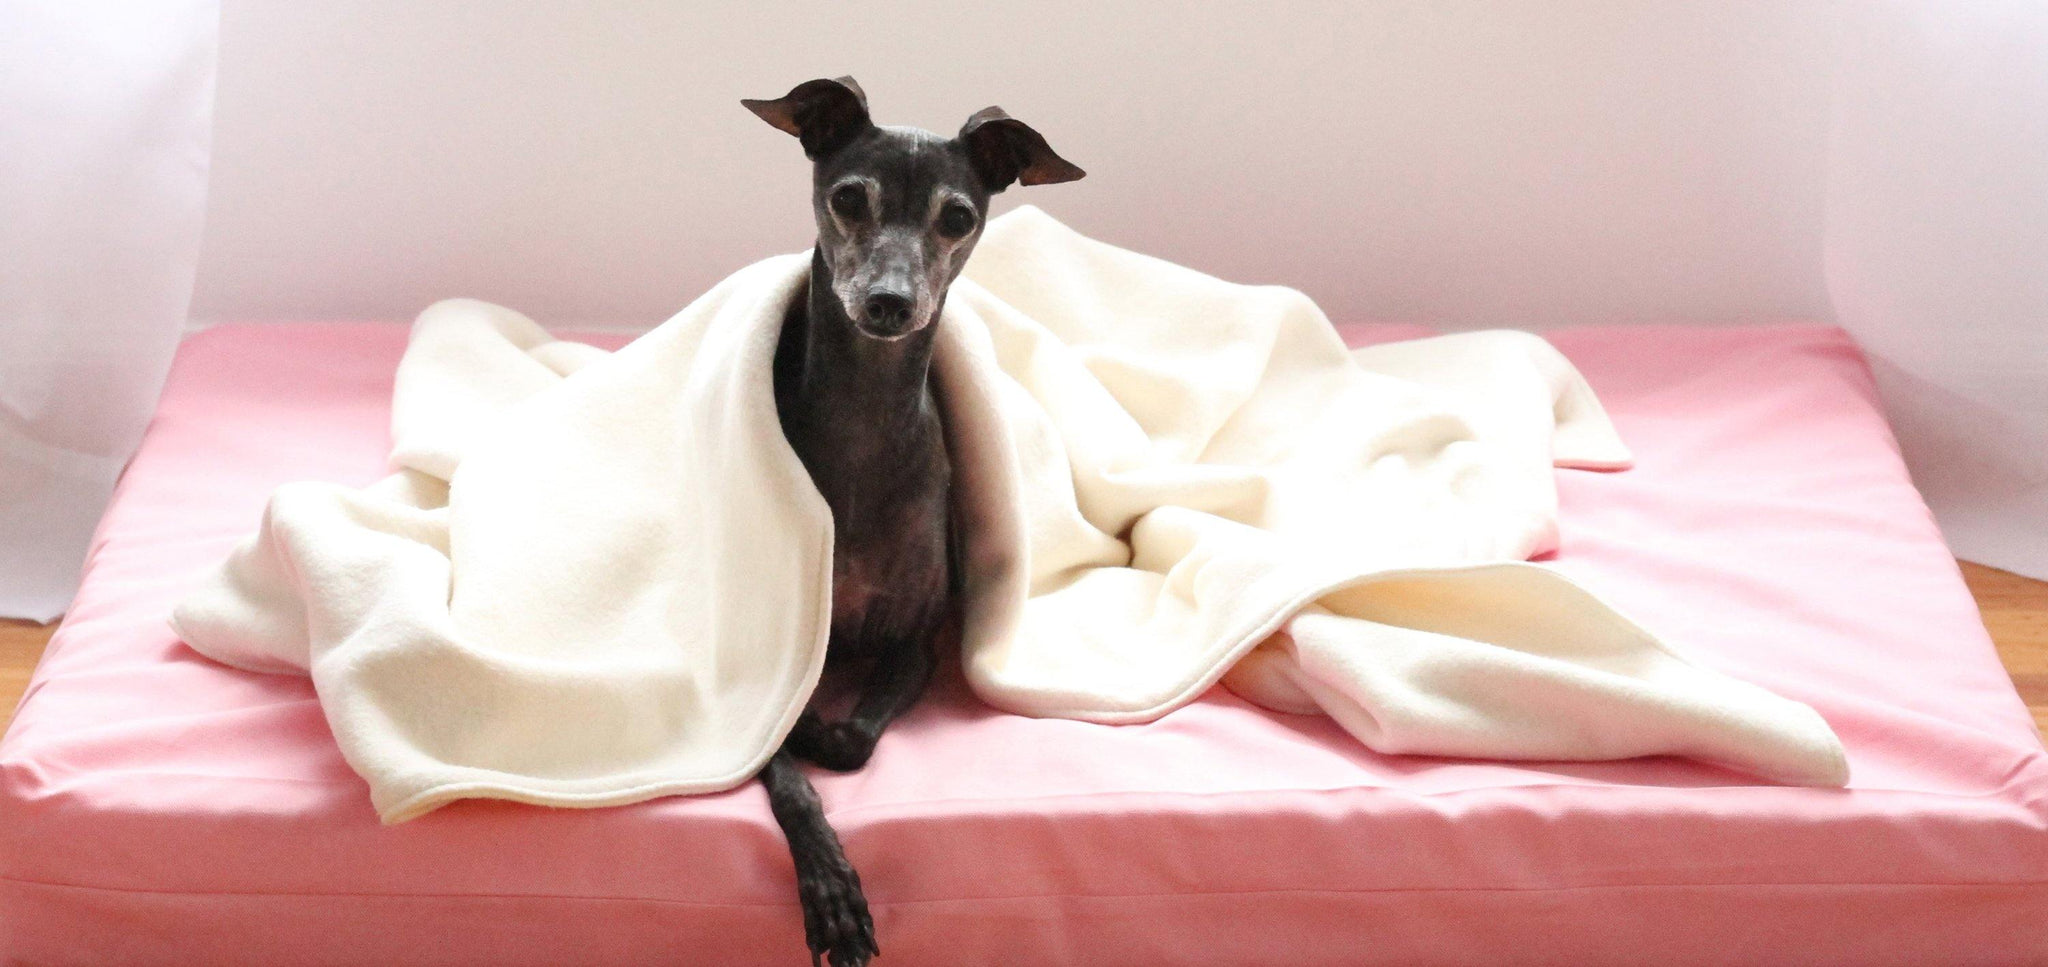 grey dog laying on orthopedic pink dog bed with natural fleece blanket